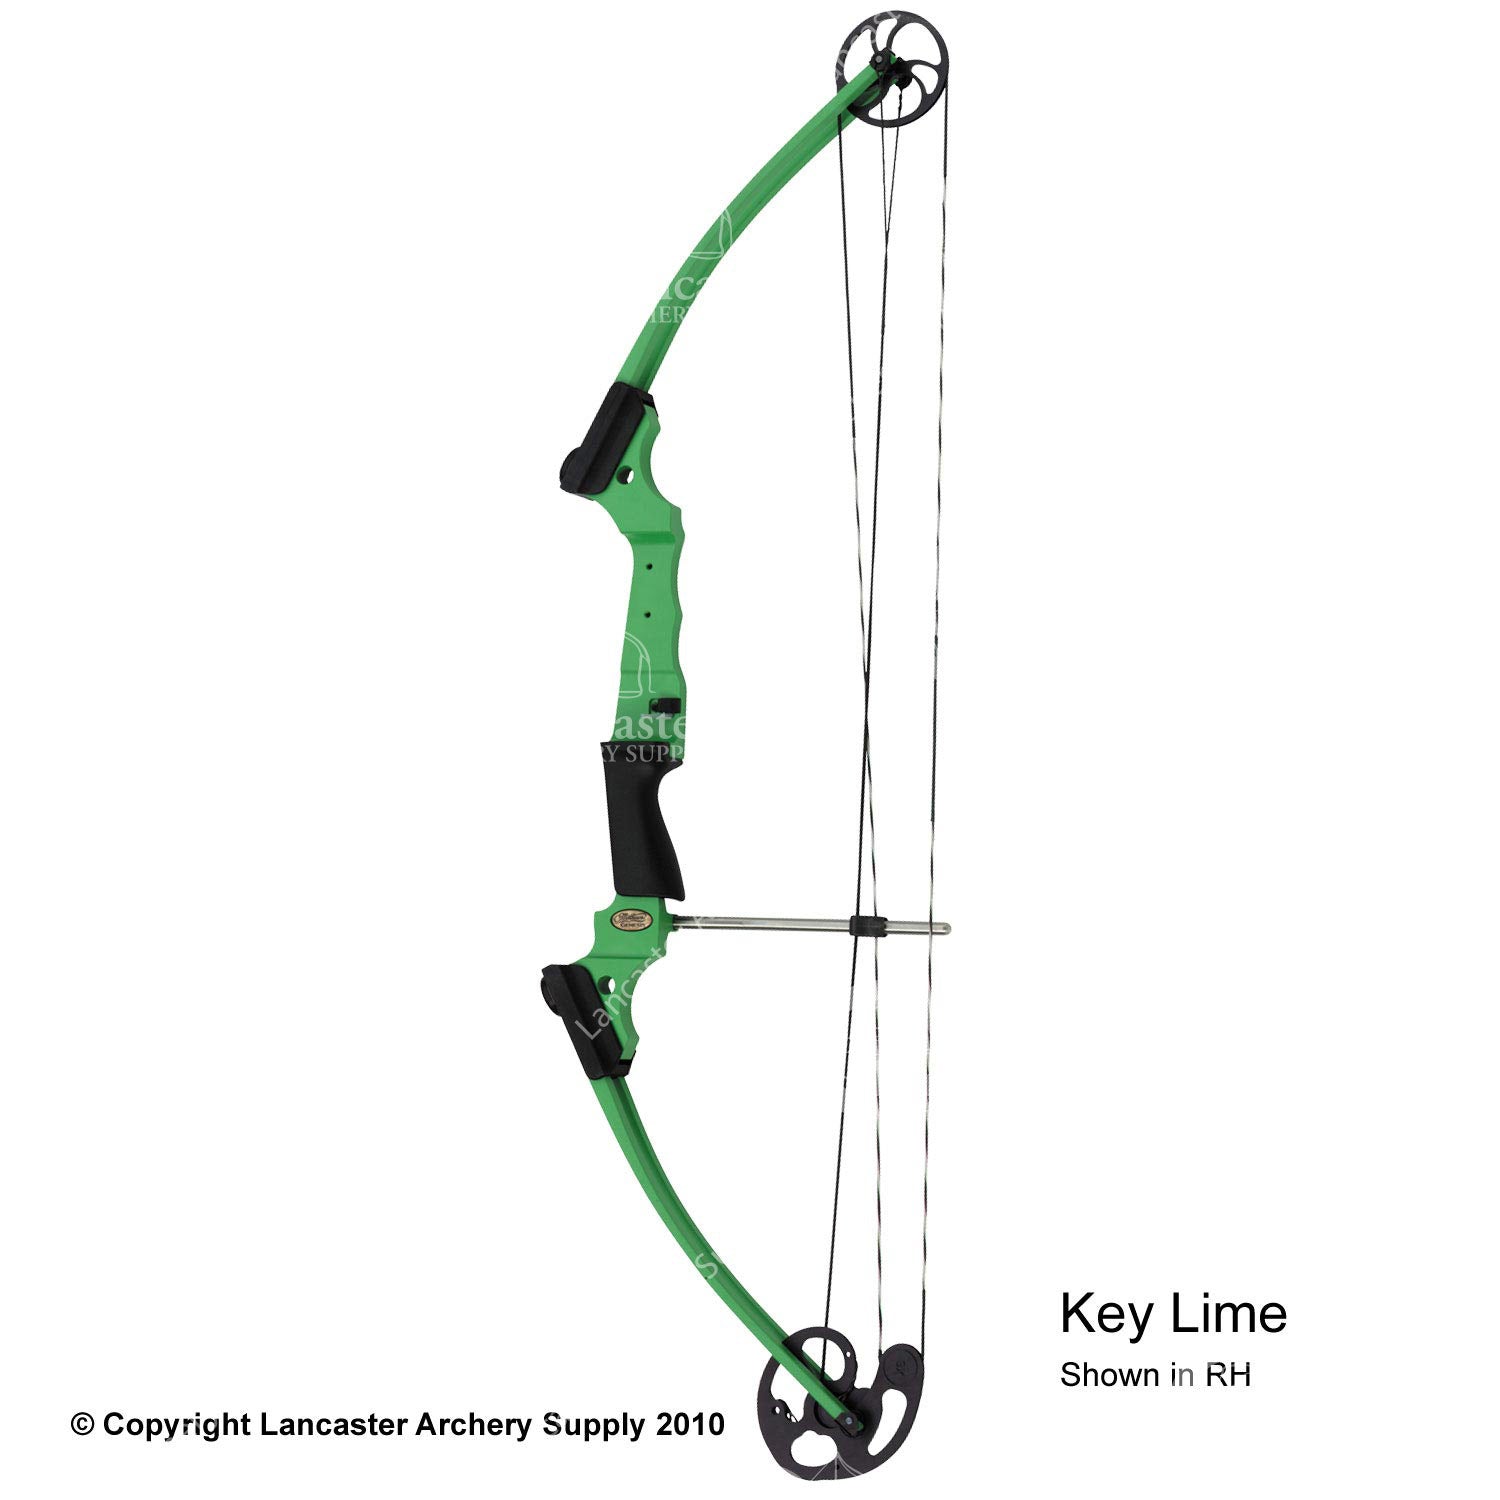 Genesis Archery Original Genesis Bow (Colors)